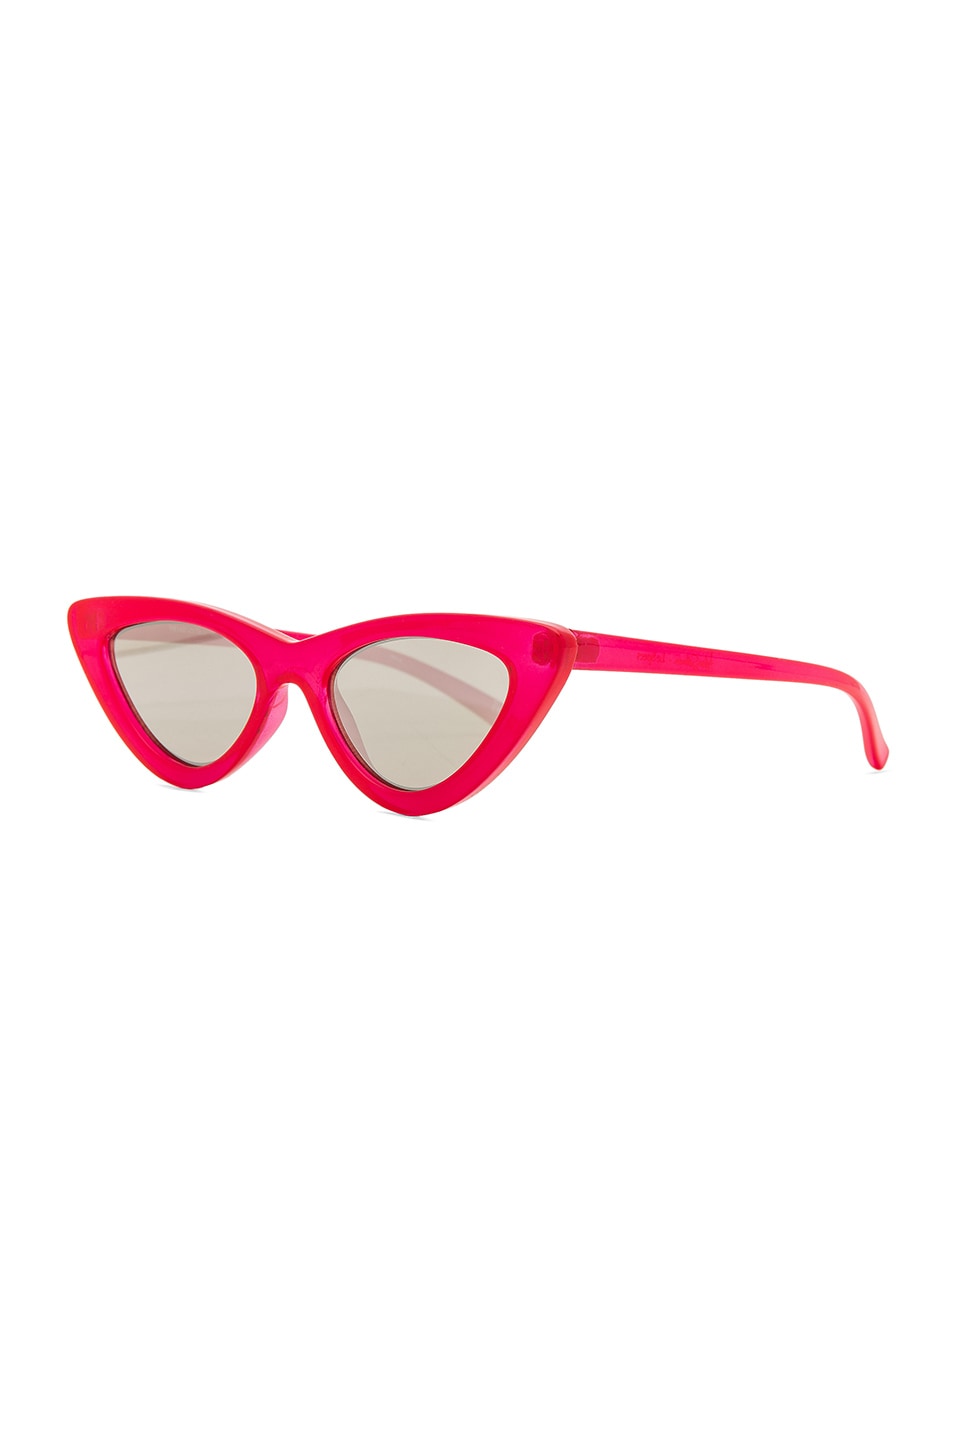 LE SPECS X Adam Selman The Last Lolita Sunglasses in Red | ModeSens